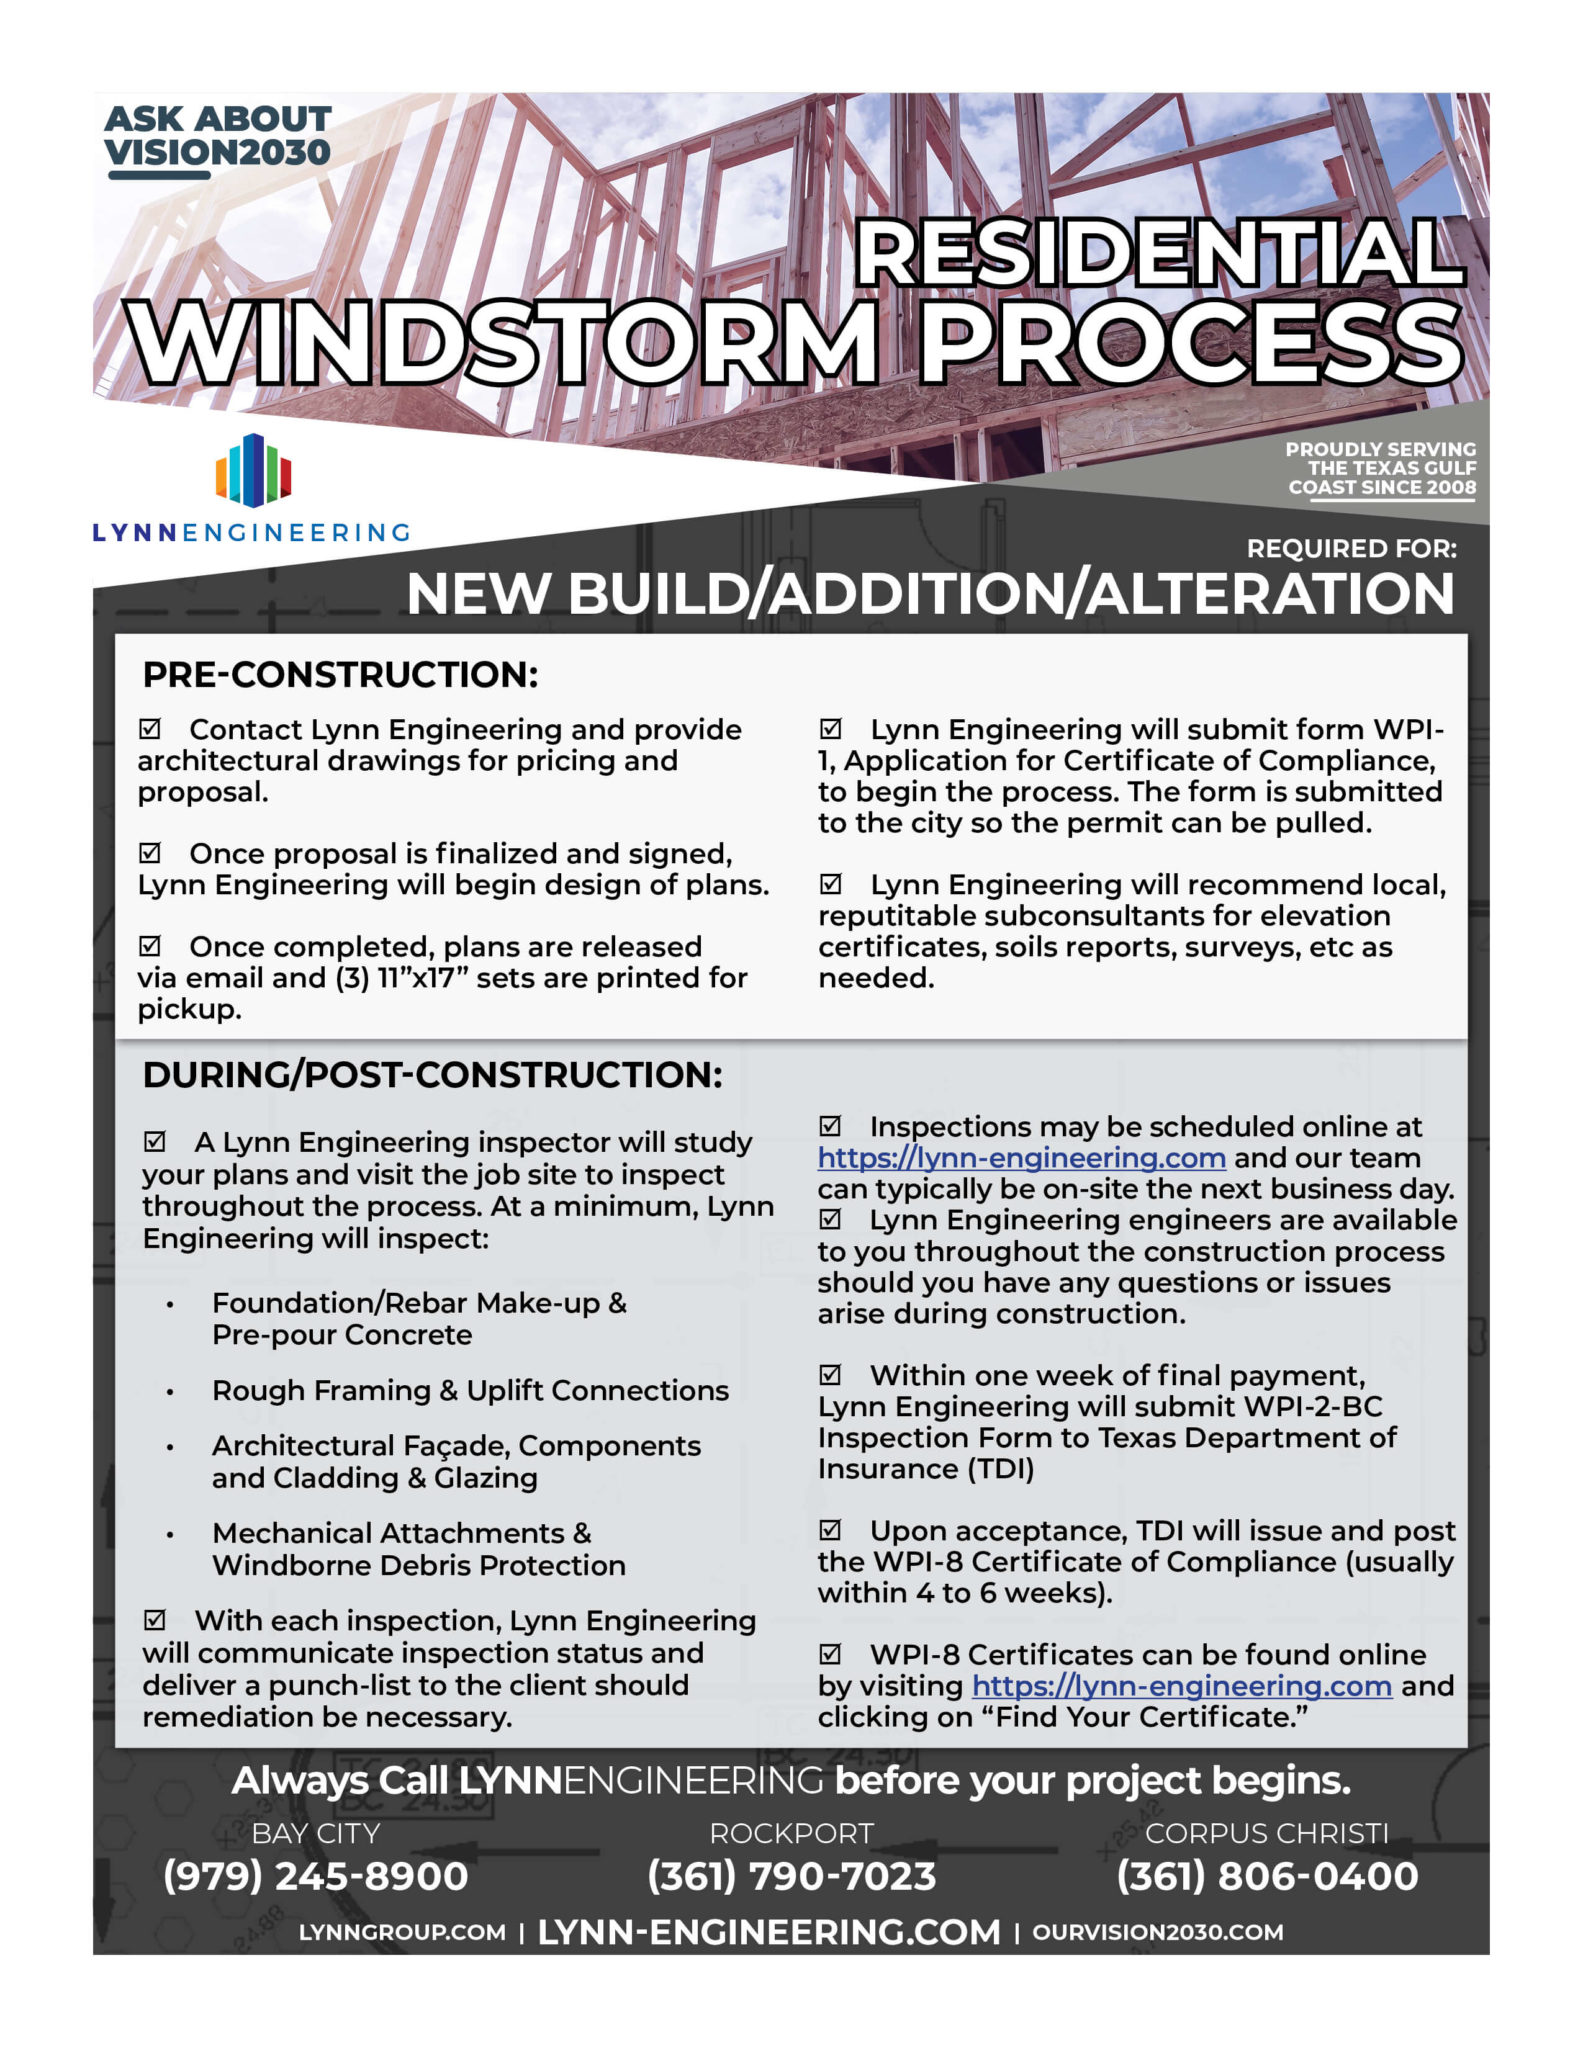 Windstorm wpi 8 certificate search information windstorm